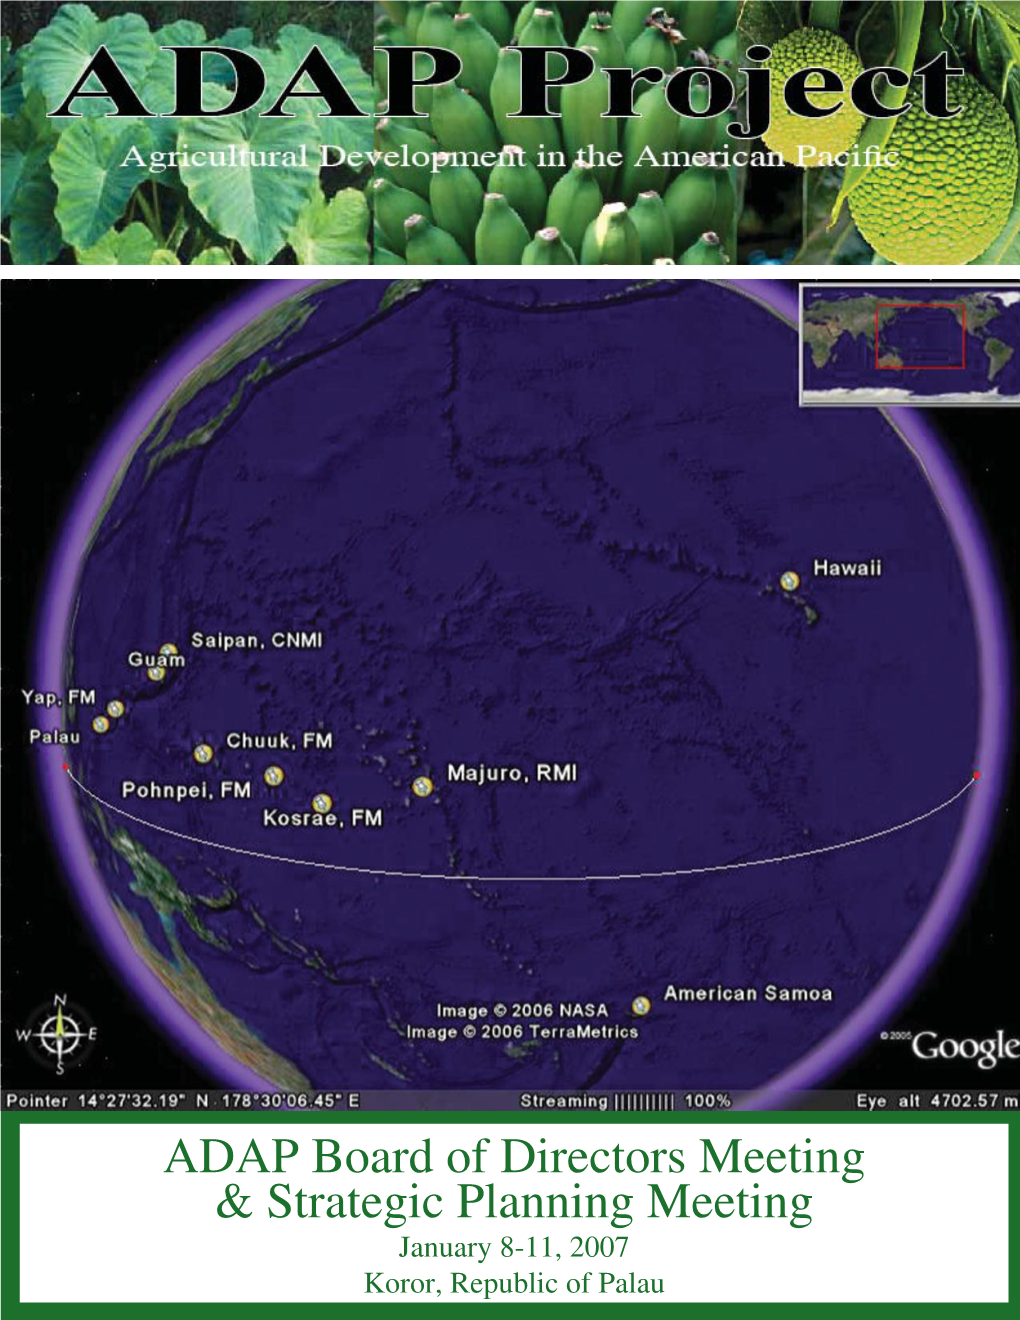 ADAP Board of Directors Meeting & Strategic Planning